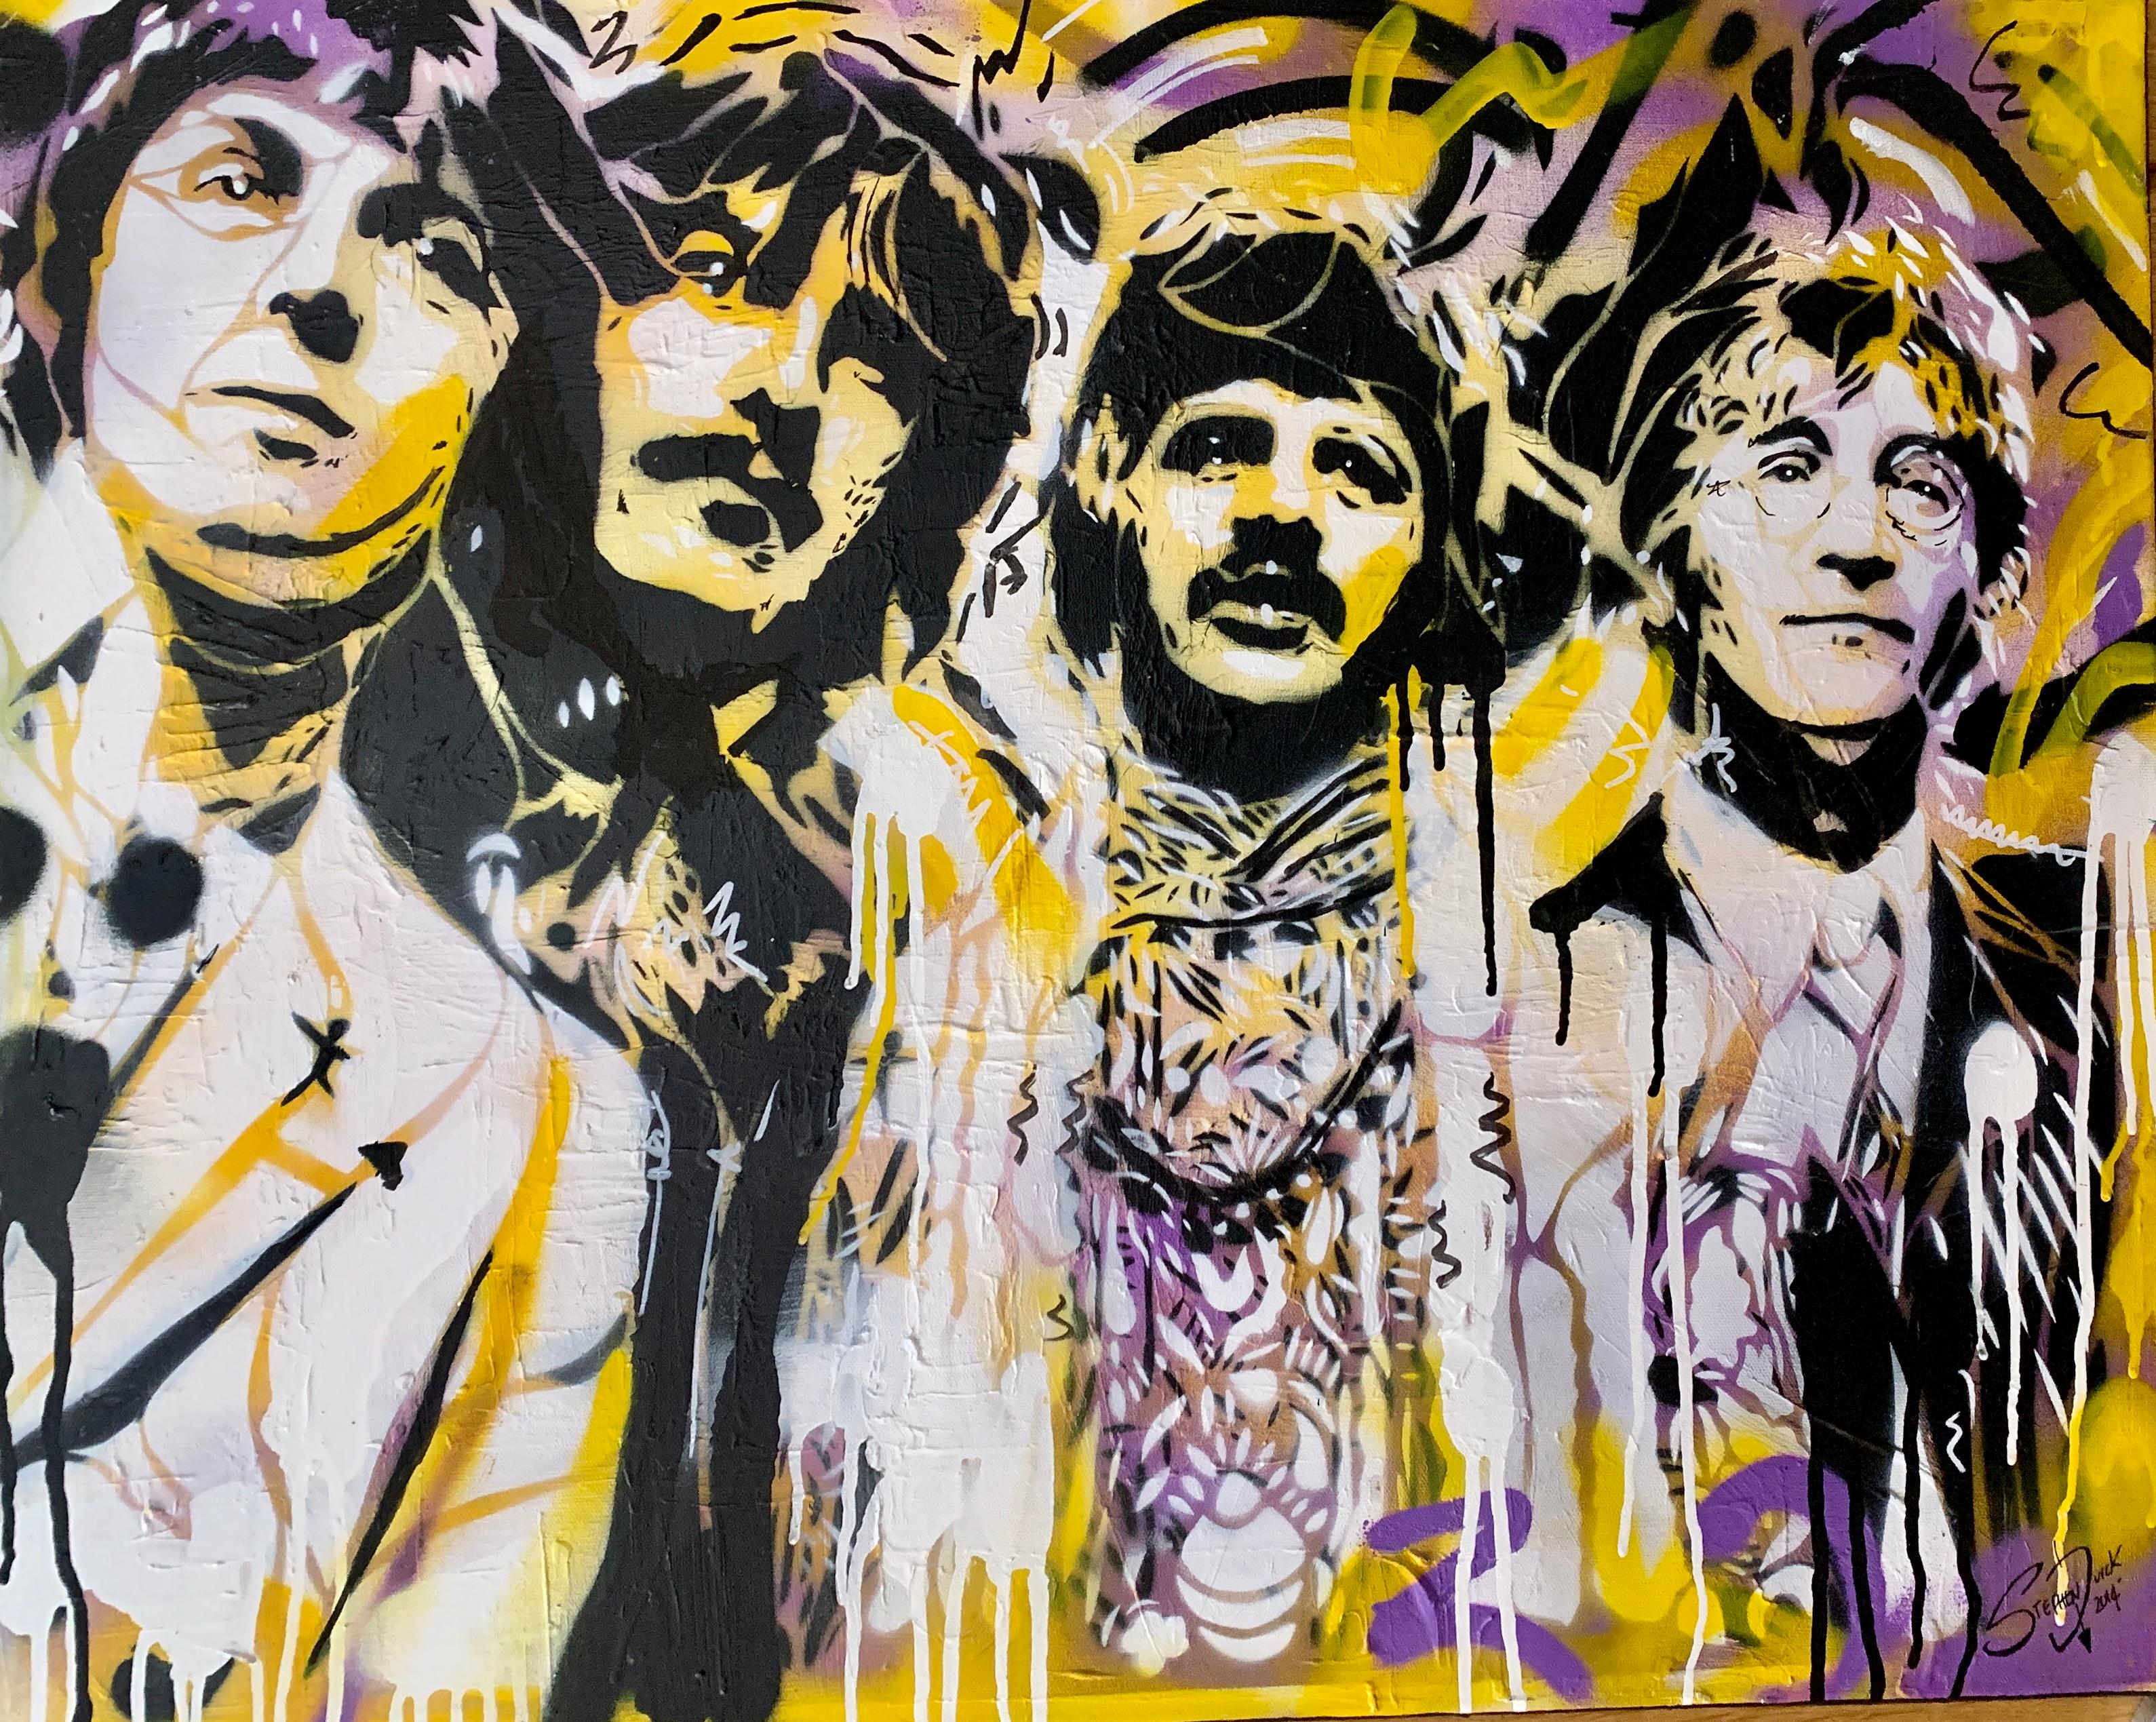 Stephen Quick Figurative Painting - Pop Art Portrait of the Beatles music group in Graffiti, street art style